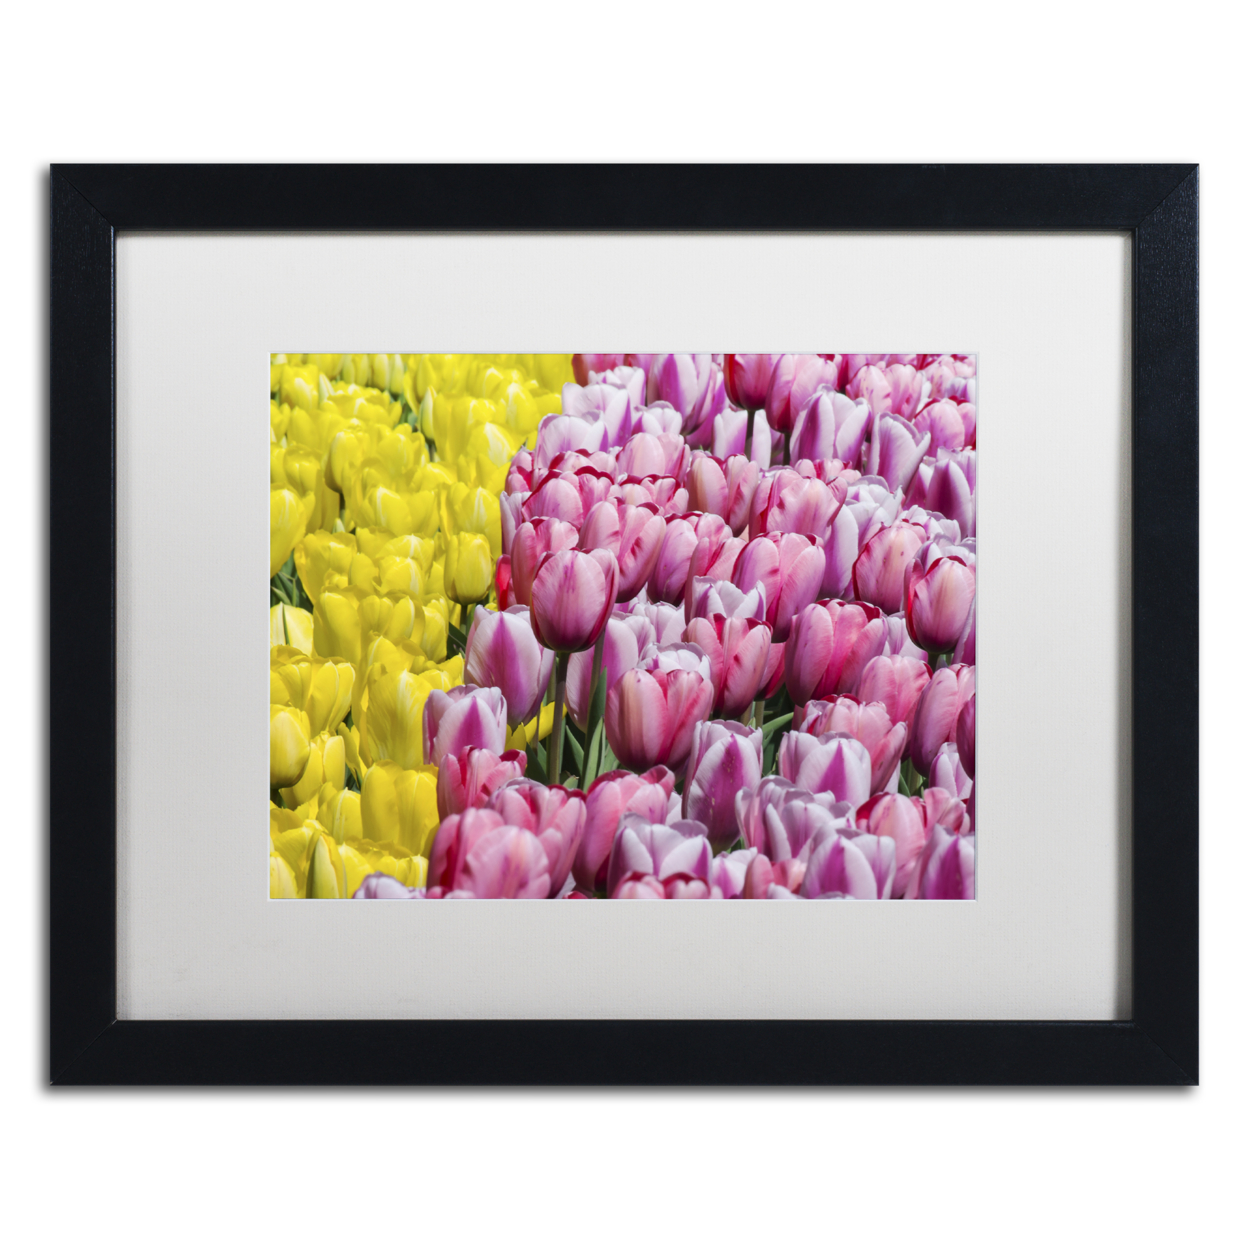 Kurt Shaffer 'Tulip Heaven' Black Wooden Framed Art 18 X 22 Inches